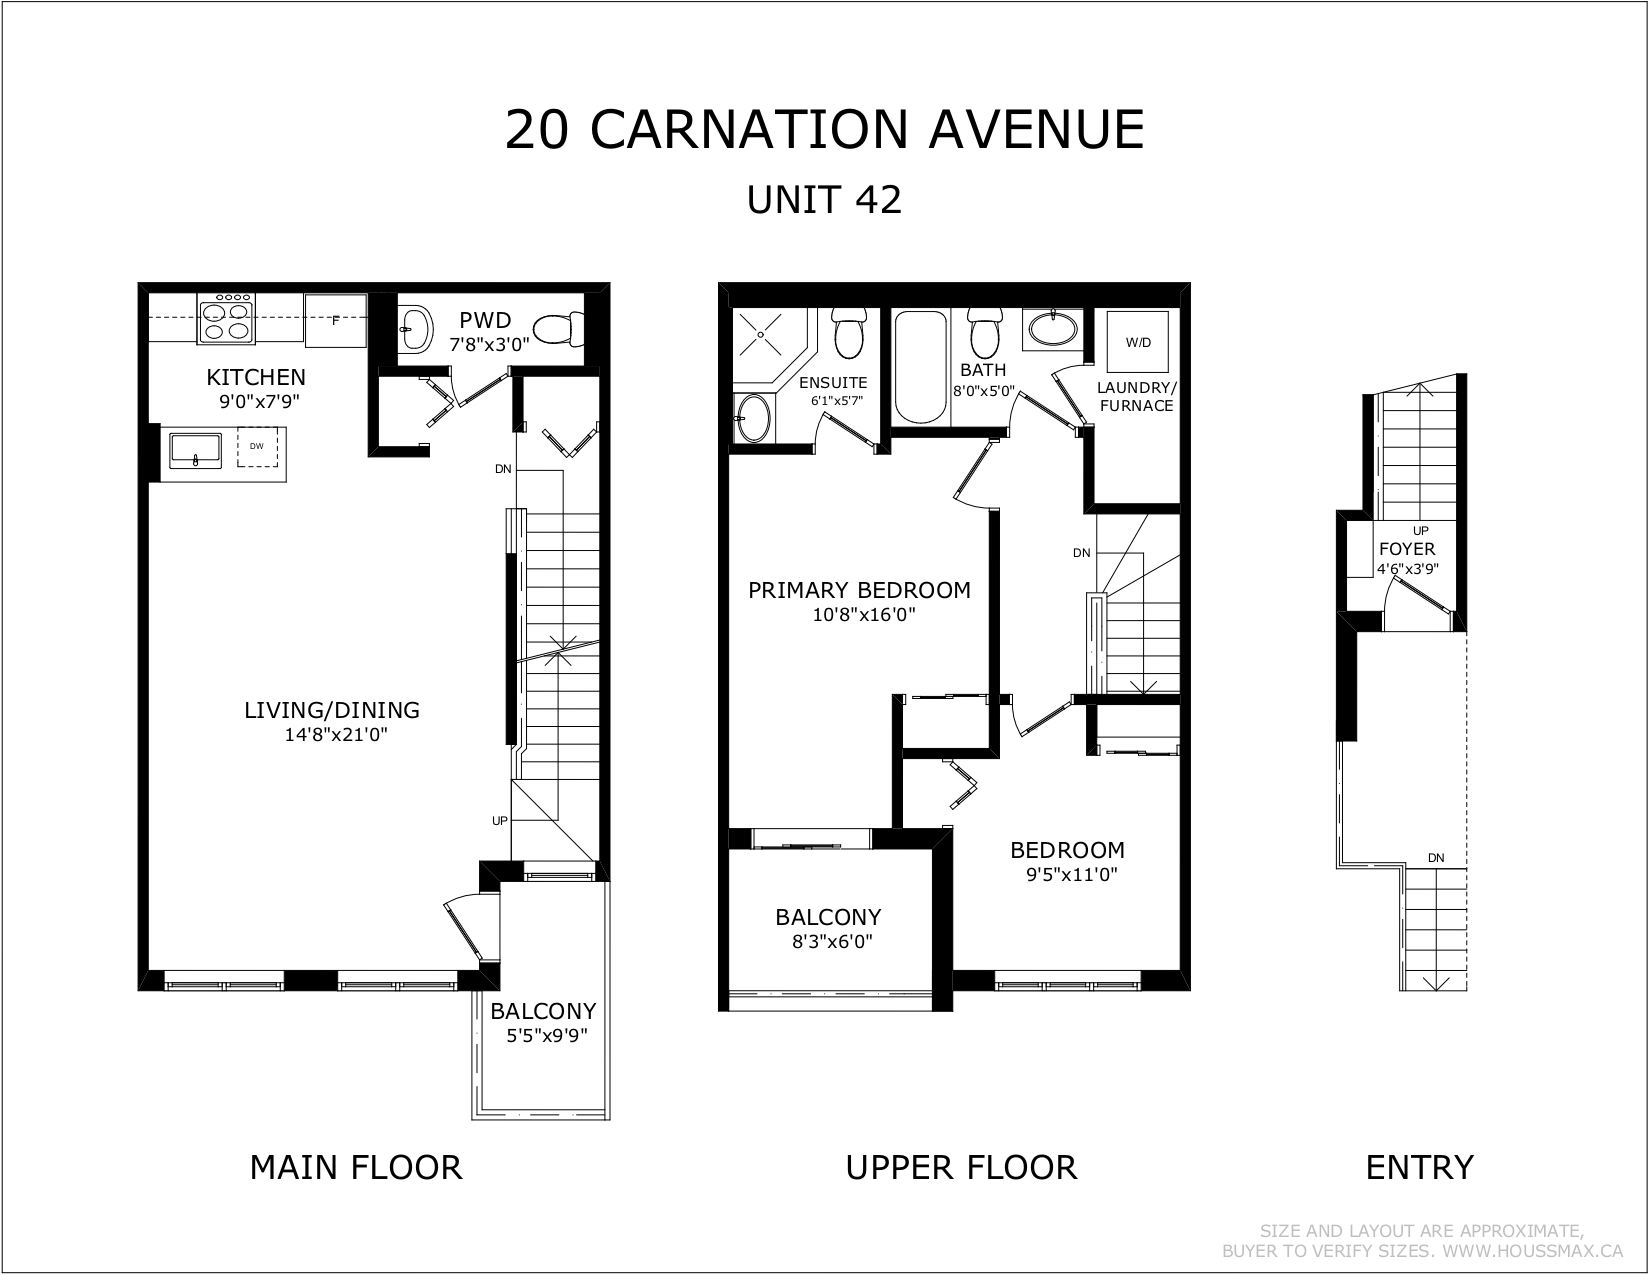 Floor plans for 20 Carnation Ave Unit 42.